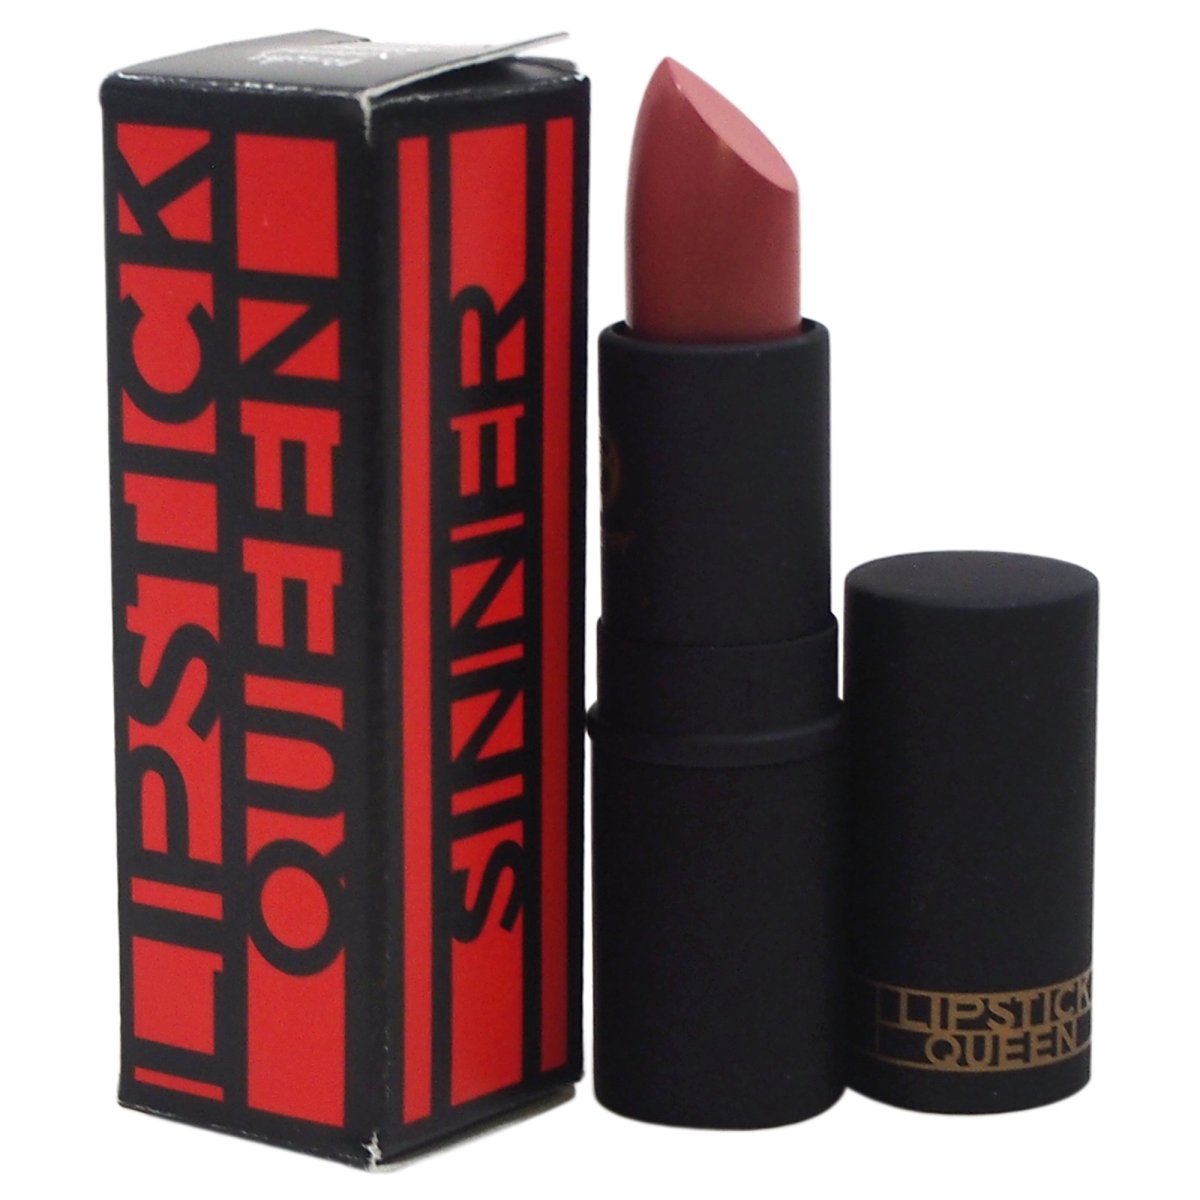 W-c-6686 0.12 Oz Sinner Lipstick For Women, Bright Natural